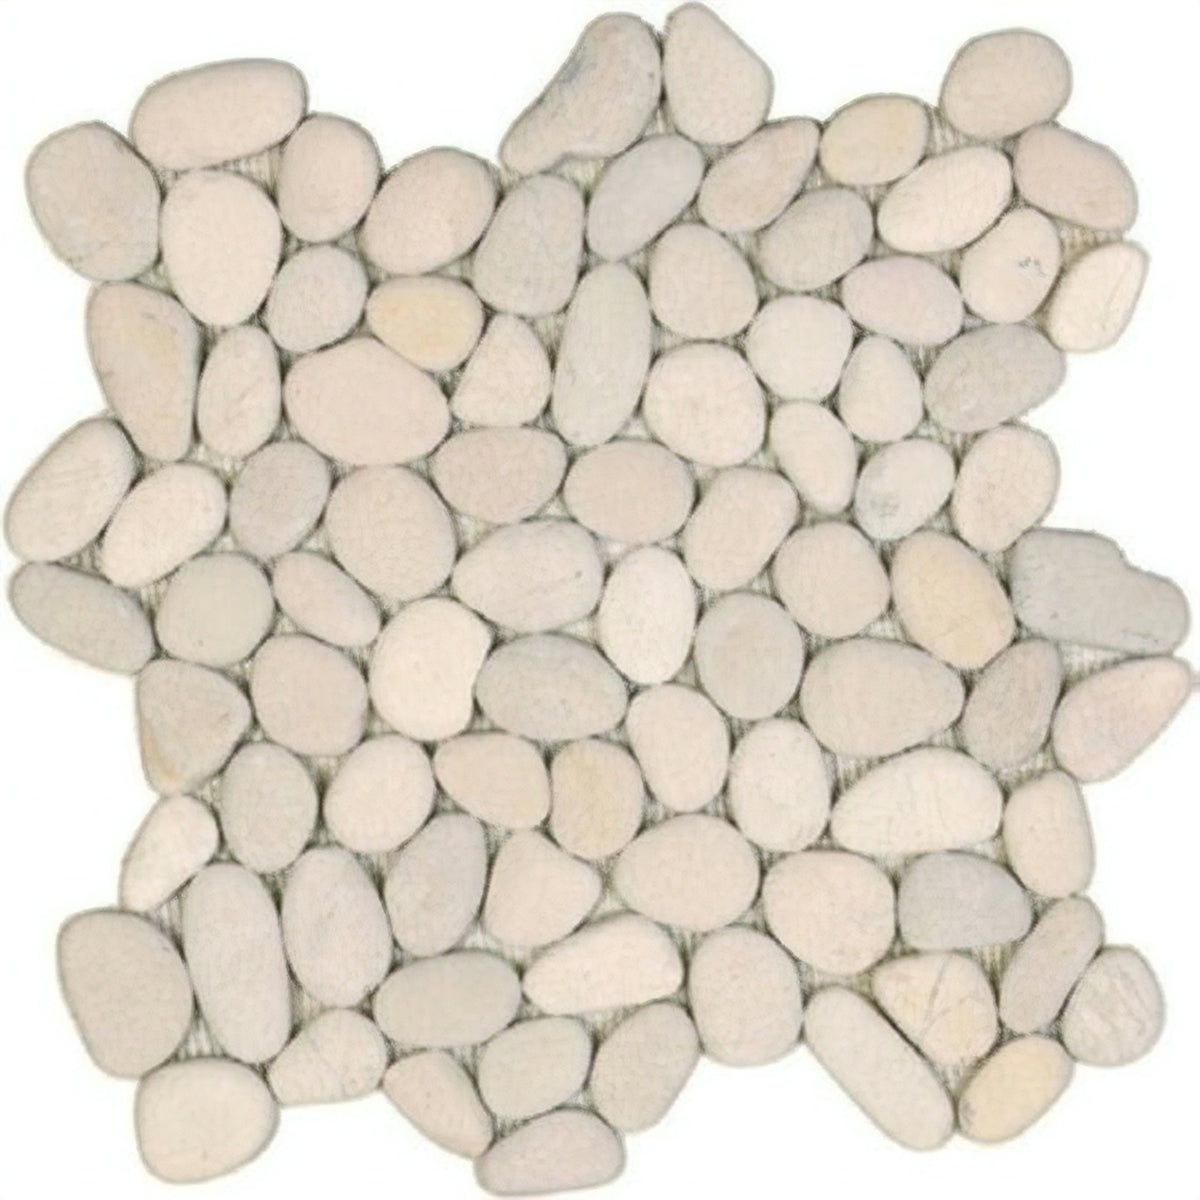 Tesoro Decorative Collection - Ocean Stone Mosaics - White Pebble